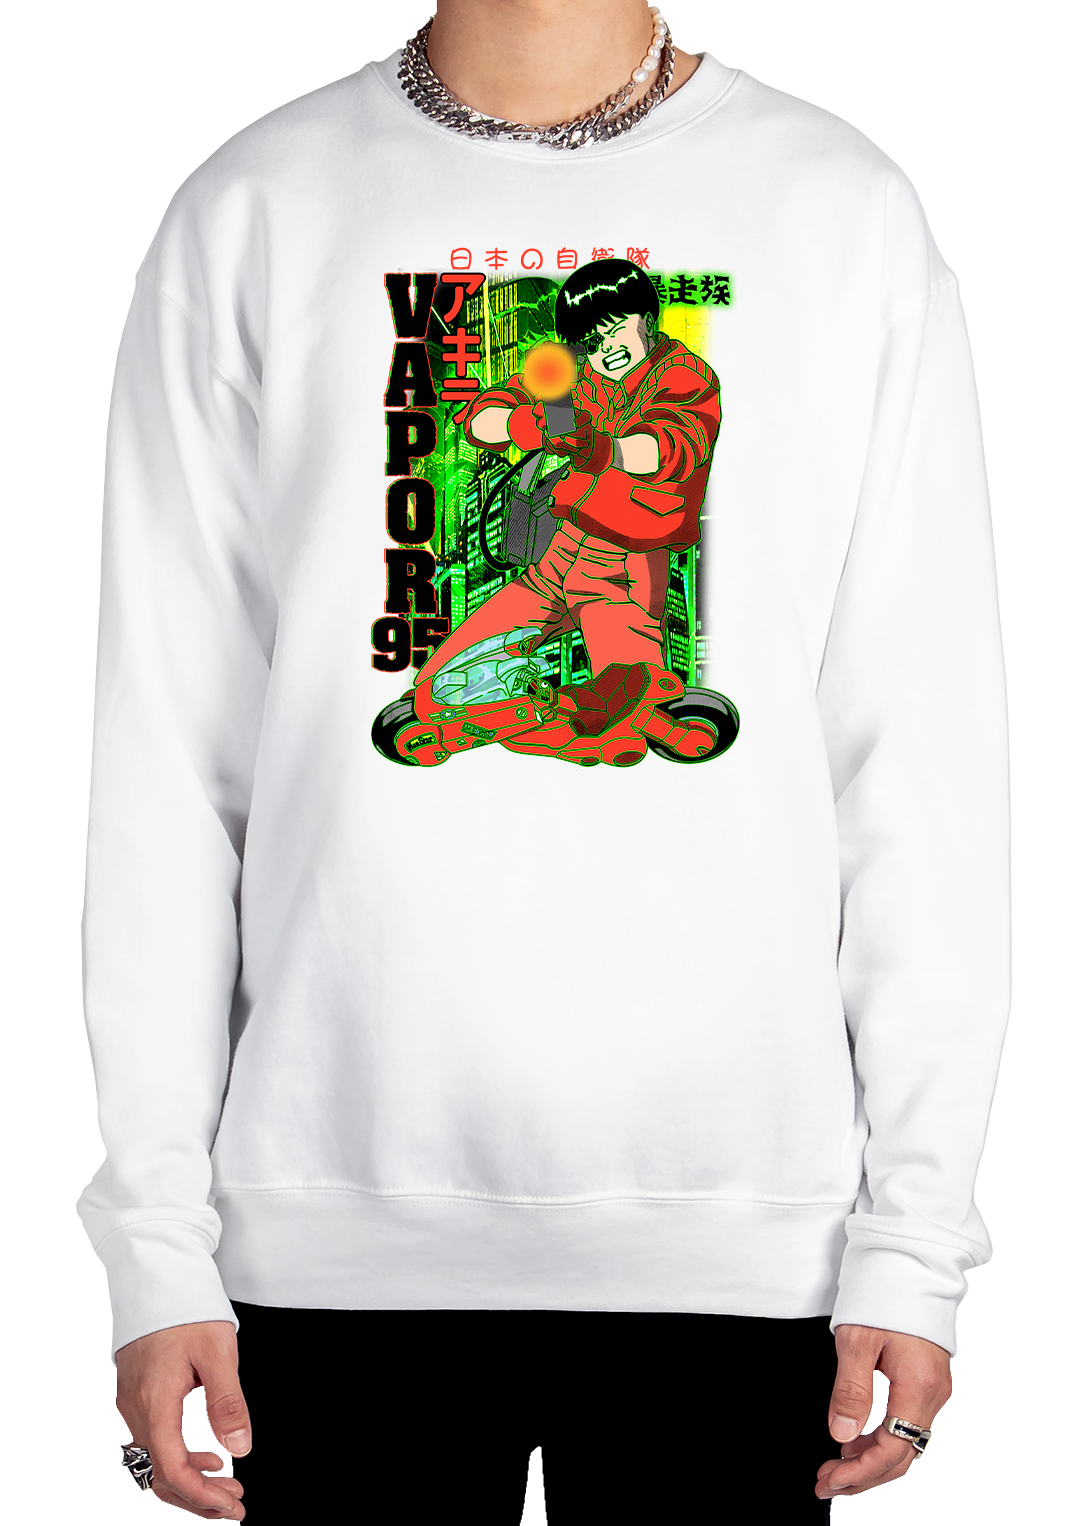 Kaneda's Revenge Sweatshirt